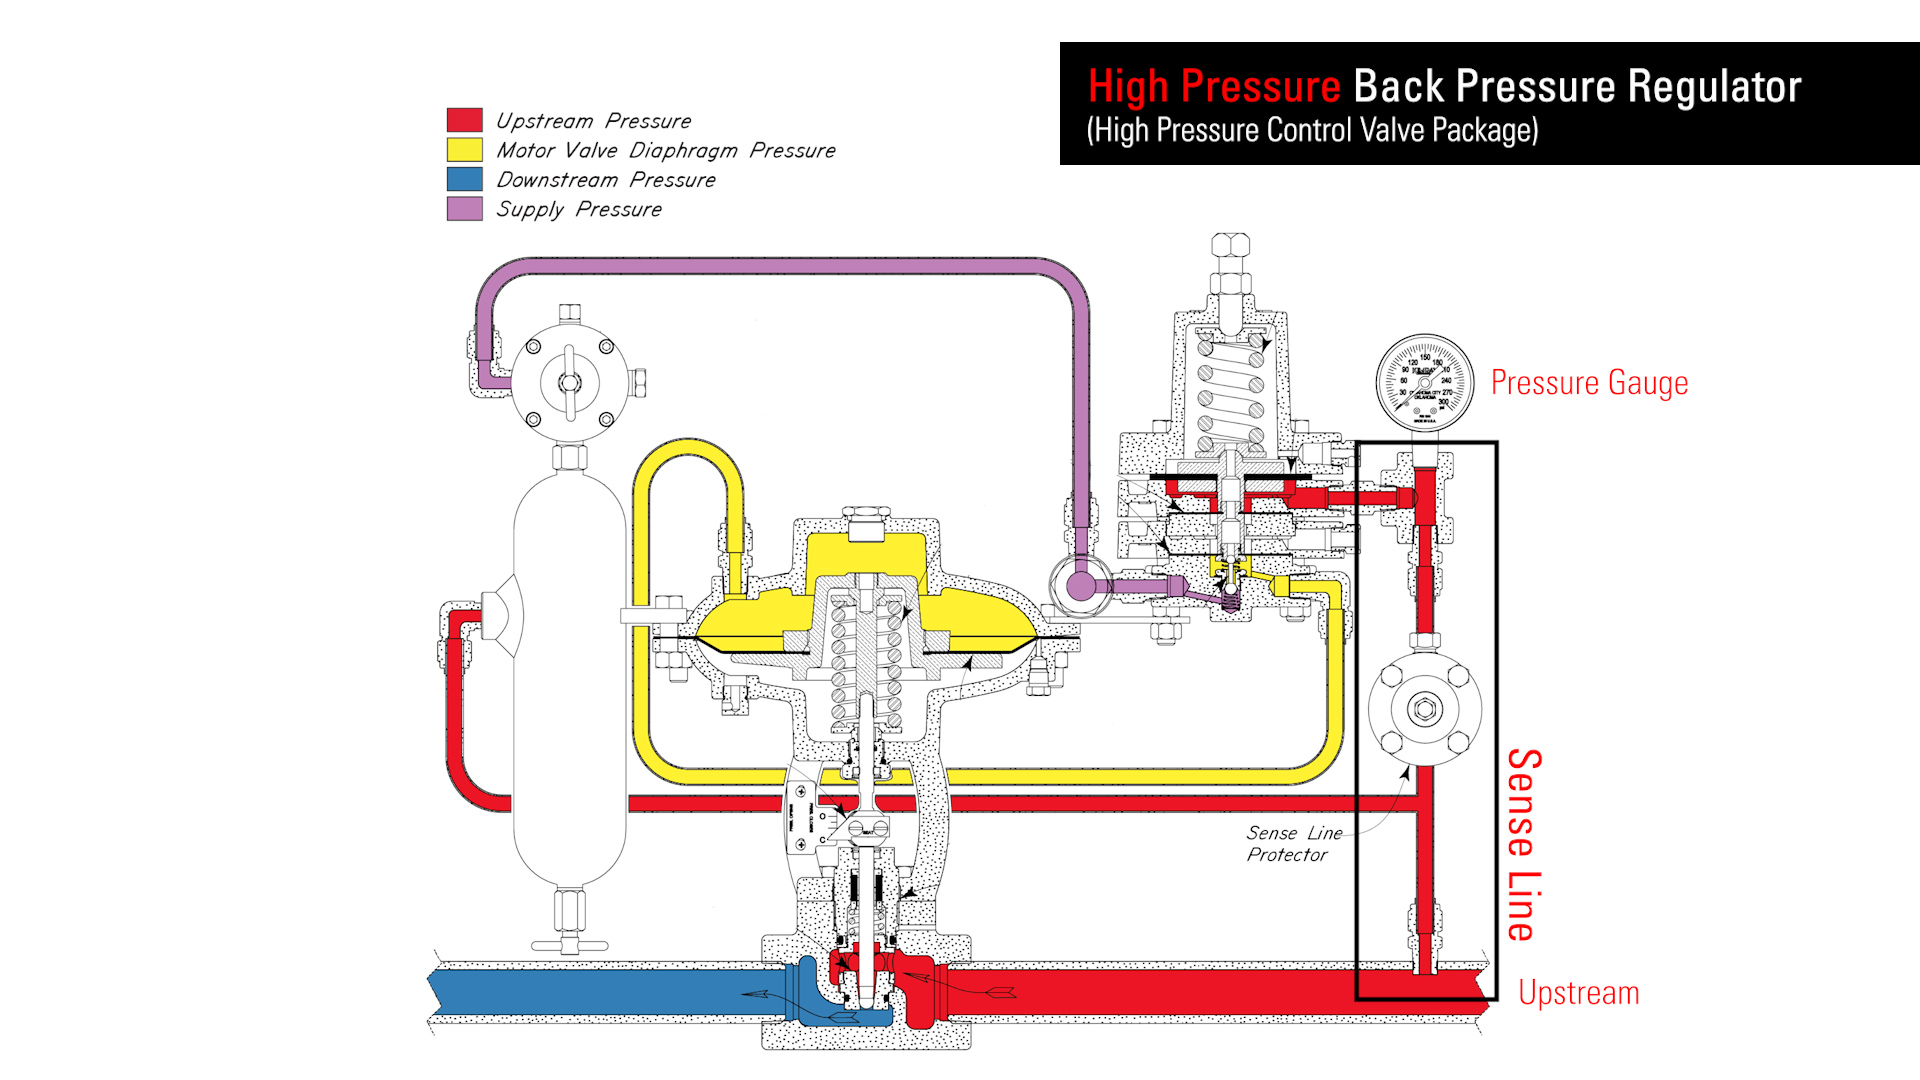 Back Pressure Regulator vs Pressure Reducing Regulator: What's the Difference?